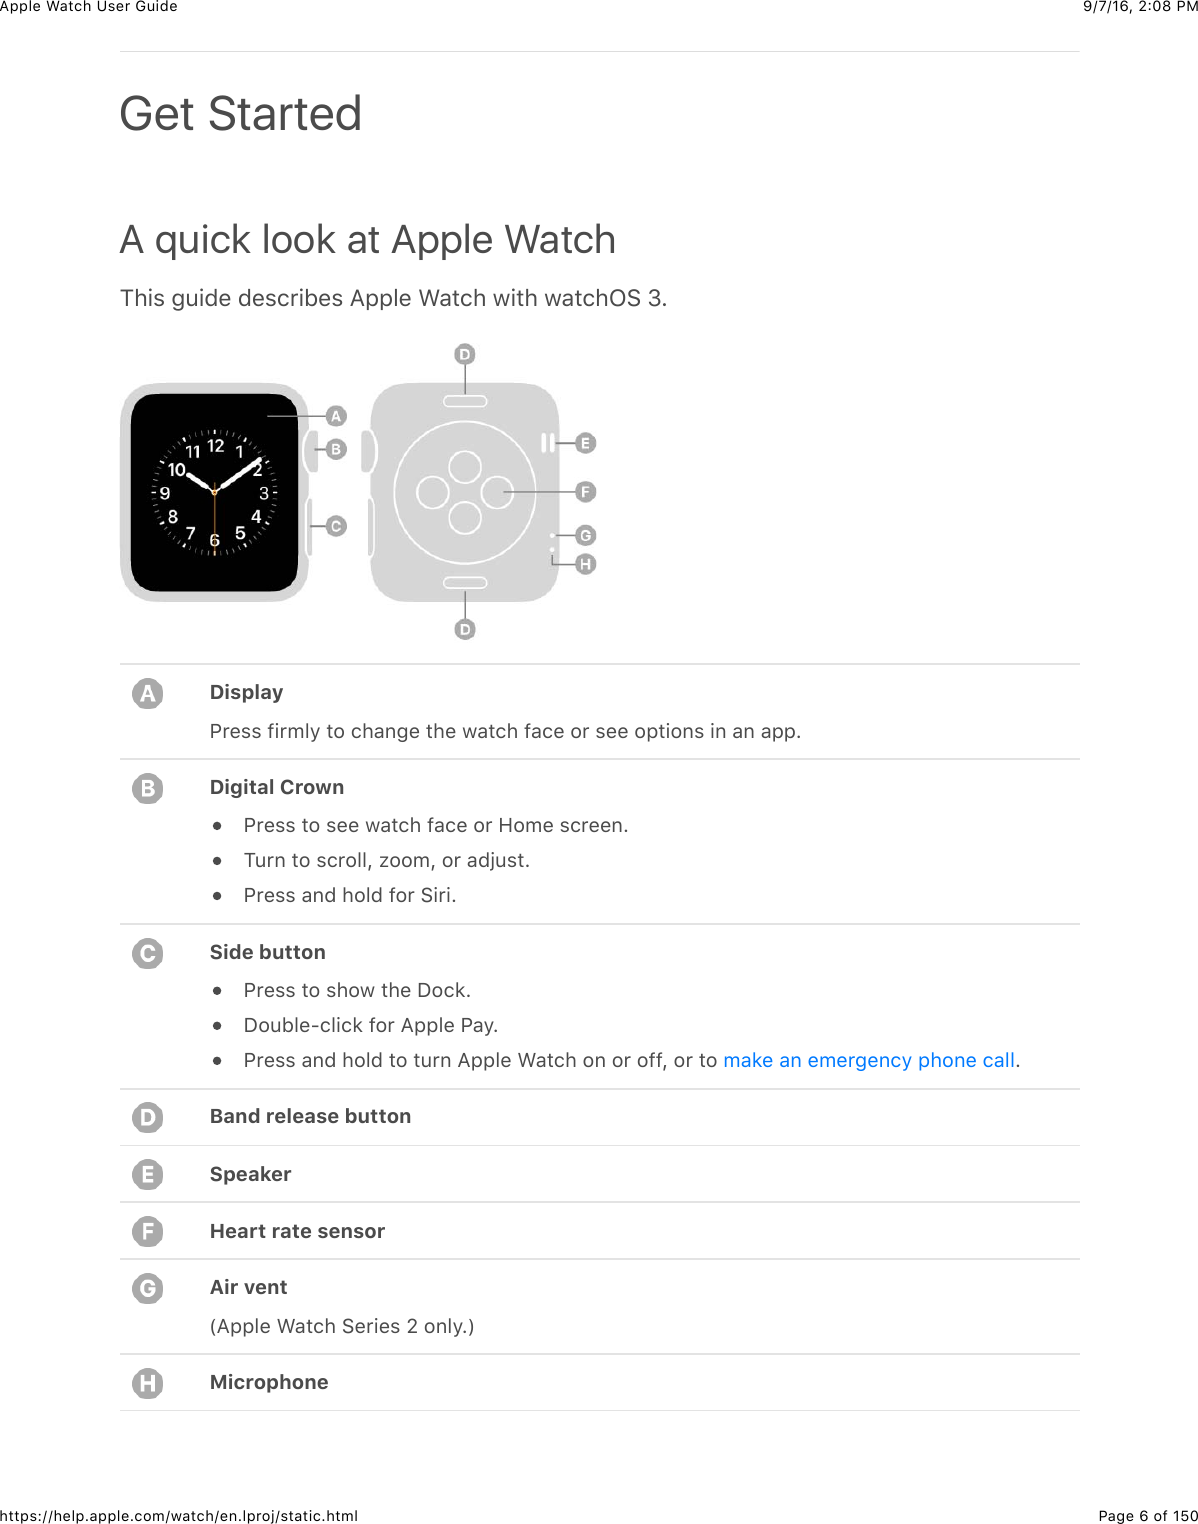 9/7/16, 2)08 PMApple Watch User GuidePage 6 of 150https://help.apple.com/watch/en.lproj/static.htmlA quick look at Apple Watch1)+$&amp;-4+0%&amp;0%$(*+B%$&amp;=22&quot;%&amp;&gt;&apos;3()&amp;7+3)&amp;7&apos;3()L6&amp;MCDisplayG*%$$&amp;@+*5&quot;/&amp;3#&amp;()&apos;,-%&amp;3)%&amp;7&apos;3()&amp;@&apos;(%&amp;#*&amp;$%%&amp;#23+#,$&amp;+,&amp;&apos;,&amp;&apos;22CDigital CrownG*%$$&amp;3#&amp;$%%&amp;7&apos;3()&amp;@&apos;(%&amp;#*&amp;9#5%&amp;$(*%%,C14*,&amp;3#&amp;$(*#&quot;&quot;J&amp;N##5J&amp;#*&amp;&apos;0O4$3CG*%$$&amp;&apos;,0&amp;)#&quot;0&amp;@#*&amp;6+*+CSide buttonG*%$$&amp;3#&amp;$)#7&amp;3)%&amp;I#(8CI#4B&quot;%?(&quot;+(8&amp;@#*&amp;=22&quot;%&amp;G&apos;/CG*%$$&amp;&apos;,0&amp;)#&quot;0&amp;3#&amp;34*,&amp;=22&quot;%&amp;&gt;&apos;3()&amp;#,&amp;#*&amp;#@@J&amp;#*&amp;3#&amp; CBand release buttonSpeakerHeart rate sensorAir ventP=22&quot;%&amp;&gt;&apos;3()&amp;6%*+%$&amp;Q&amp;#,&quot;/CRMicrophoneGet Started5&apos;8%&amp;&apos;,&amp;%5%*-%,(/&amp;2)#,%&amp;(&apos;&quot;&quot;